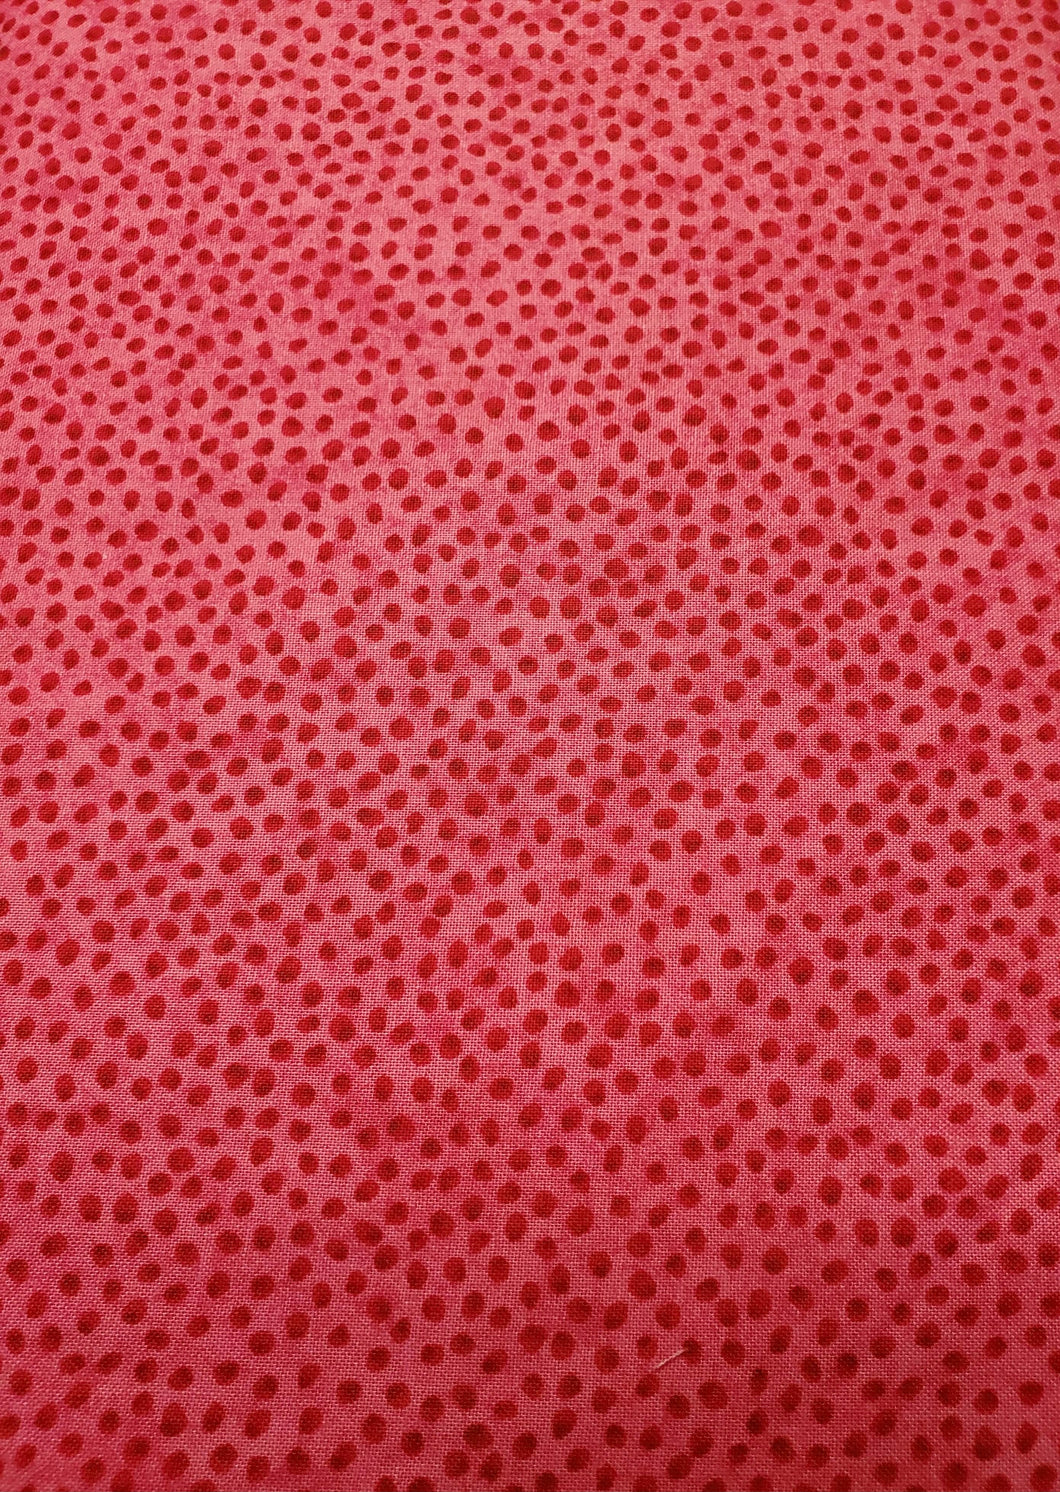 Tiny Dots / Pink jff360